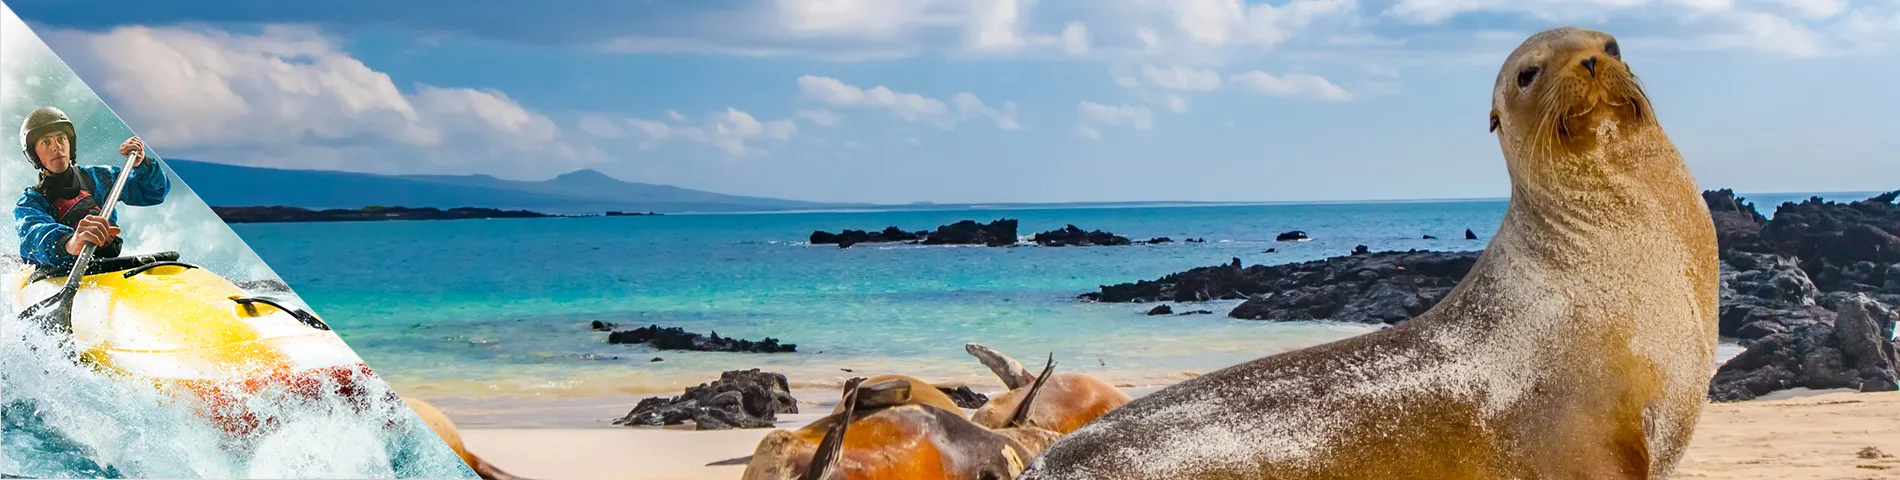 Galapagosöarna - Spanska & äventyrssporter